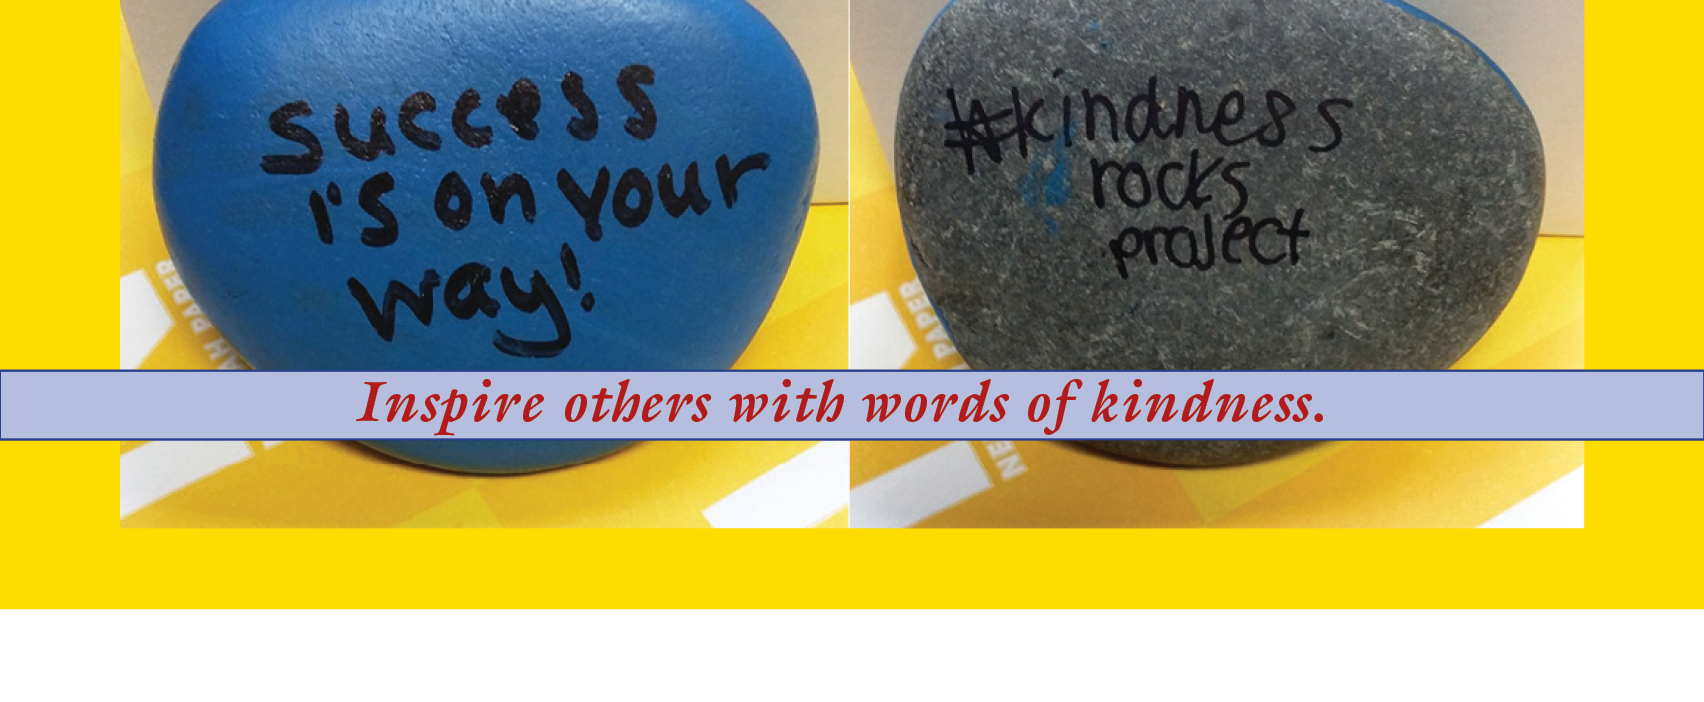 #kindnessrocksproject